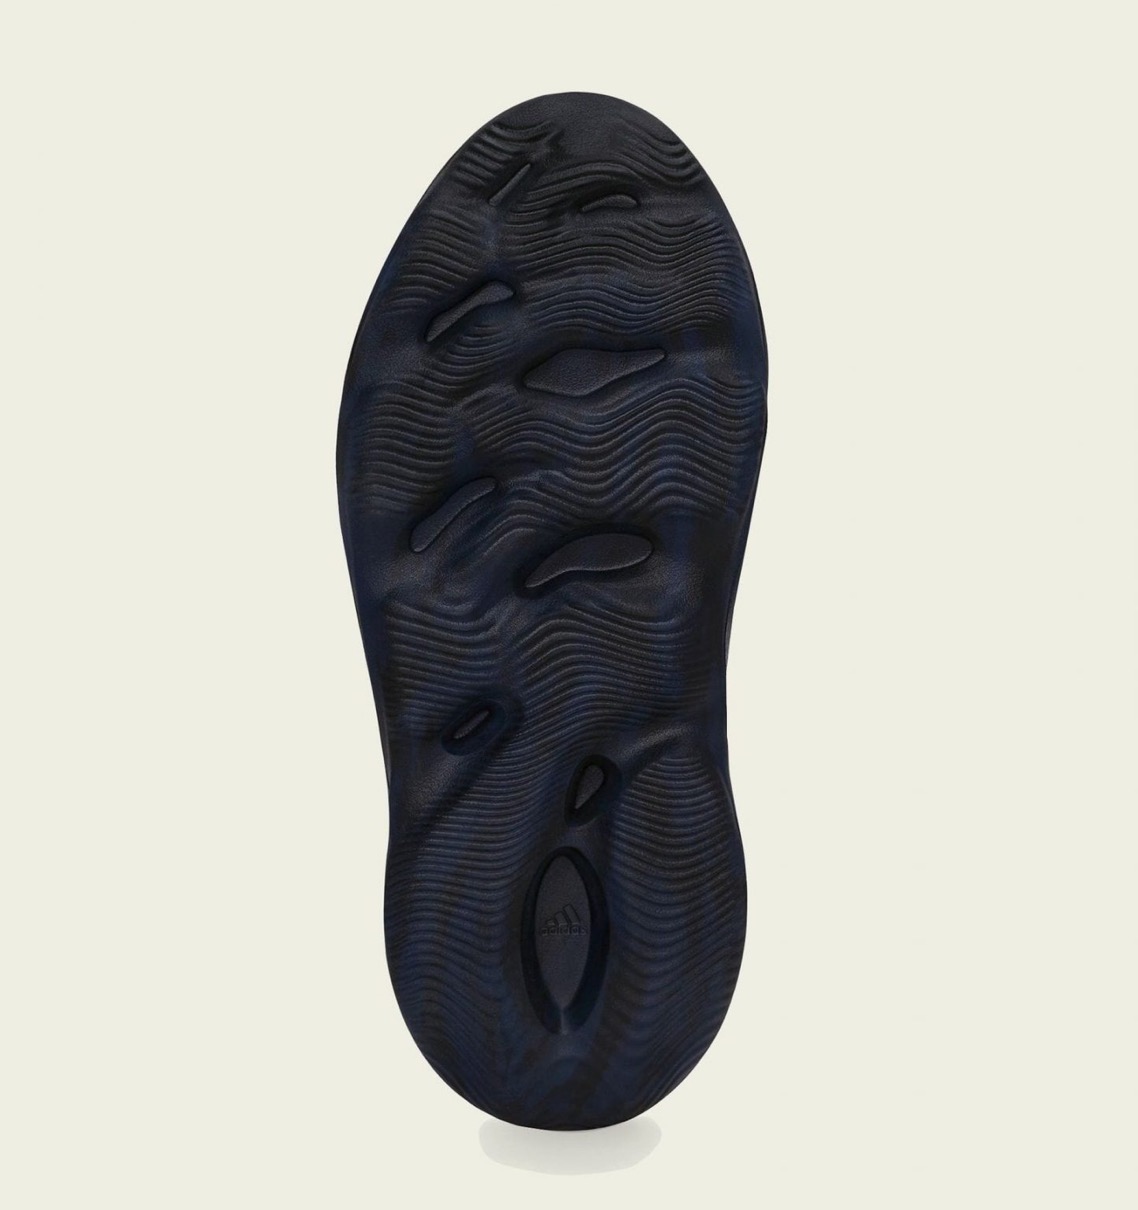 adidas】YEEZY FOAM RUNNER “MINERAL BLUE”が国内5月29日に発売予定 